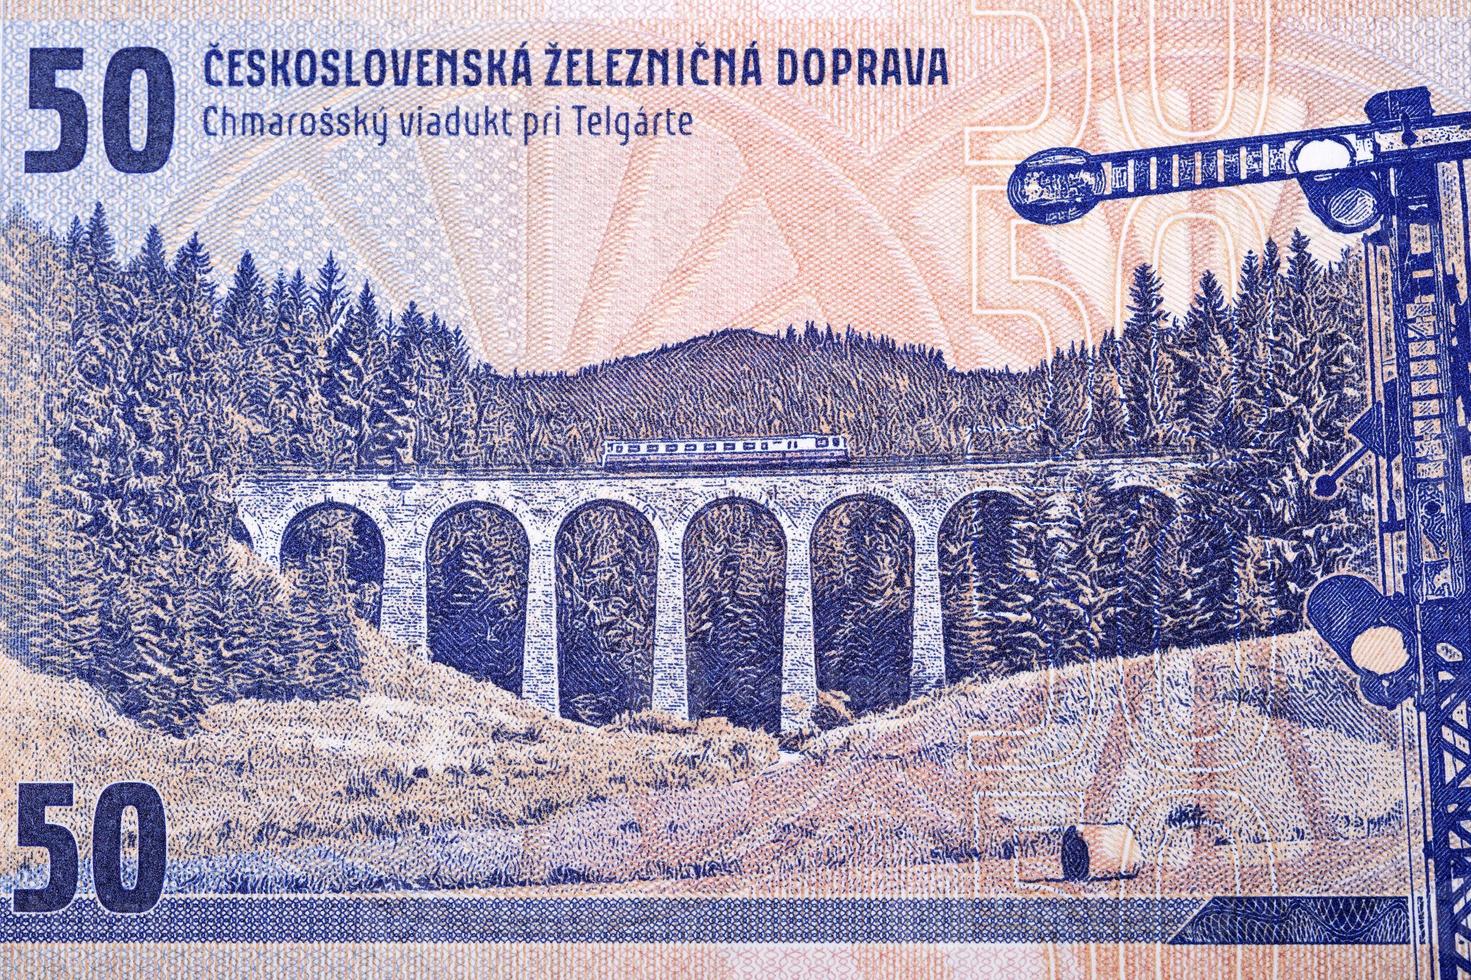 Chmarossky viadukt in Telgart from money photo